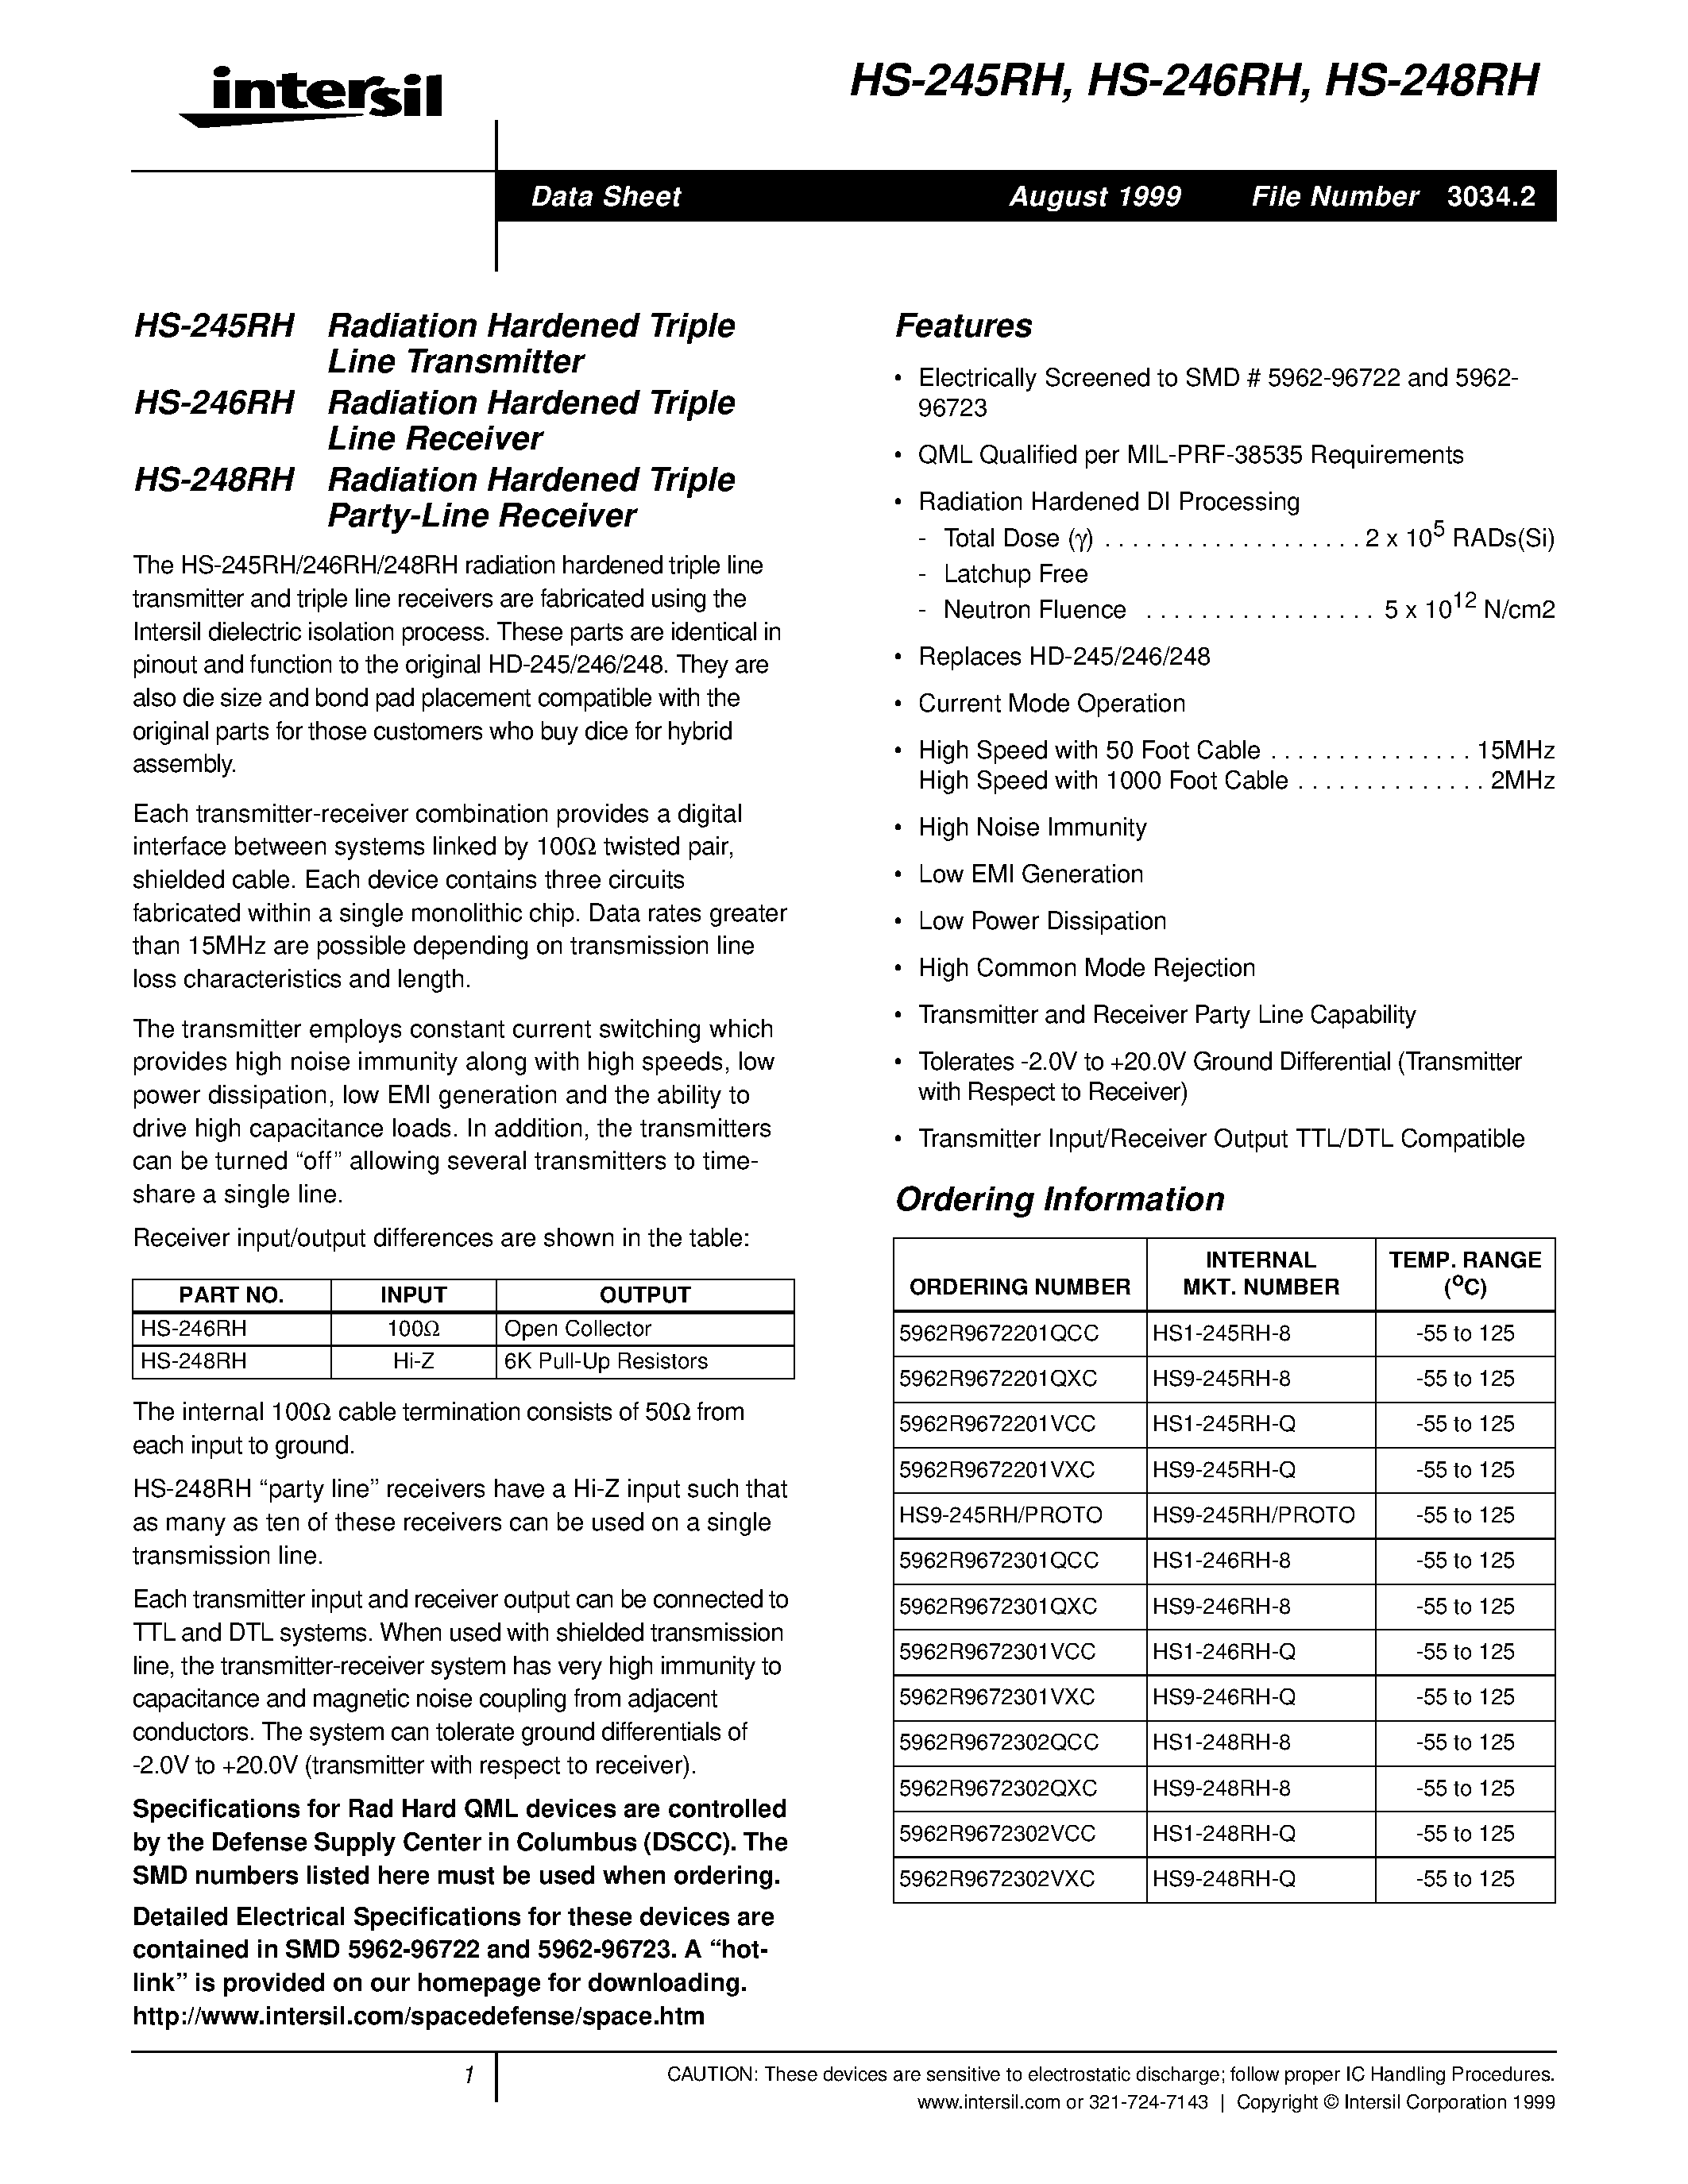 Datasheet HS1-248RH-Q - Radiation Hardened Triple Line(party-Line) Transmitter page 1